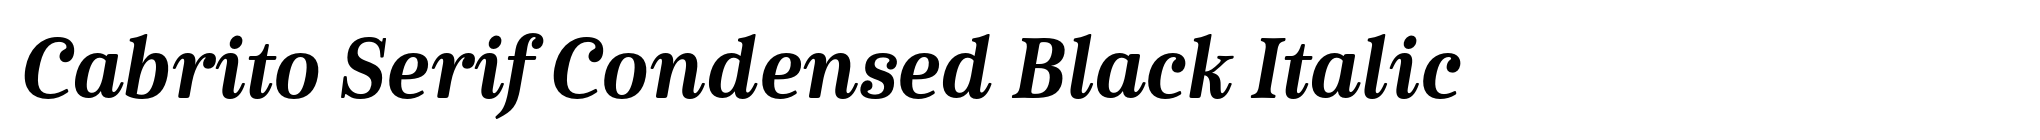 Cabrito Serif Condensed Black Italic image